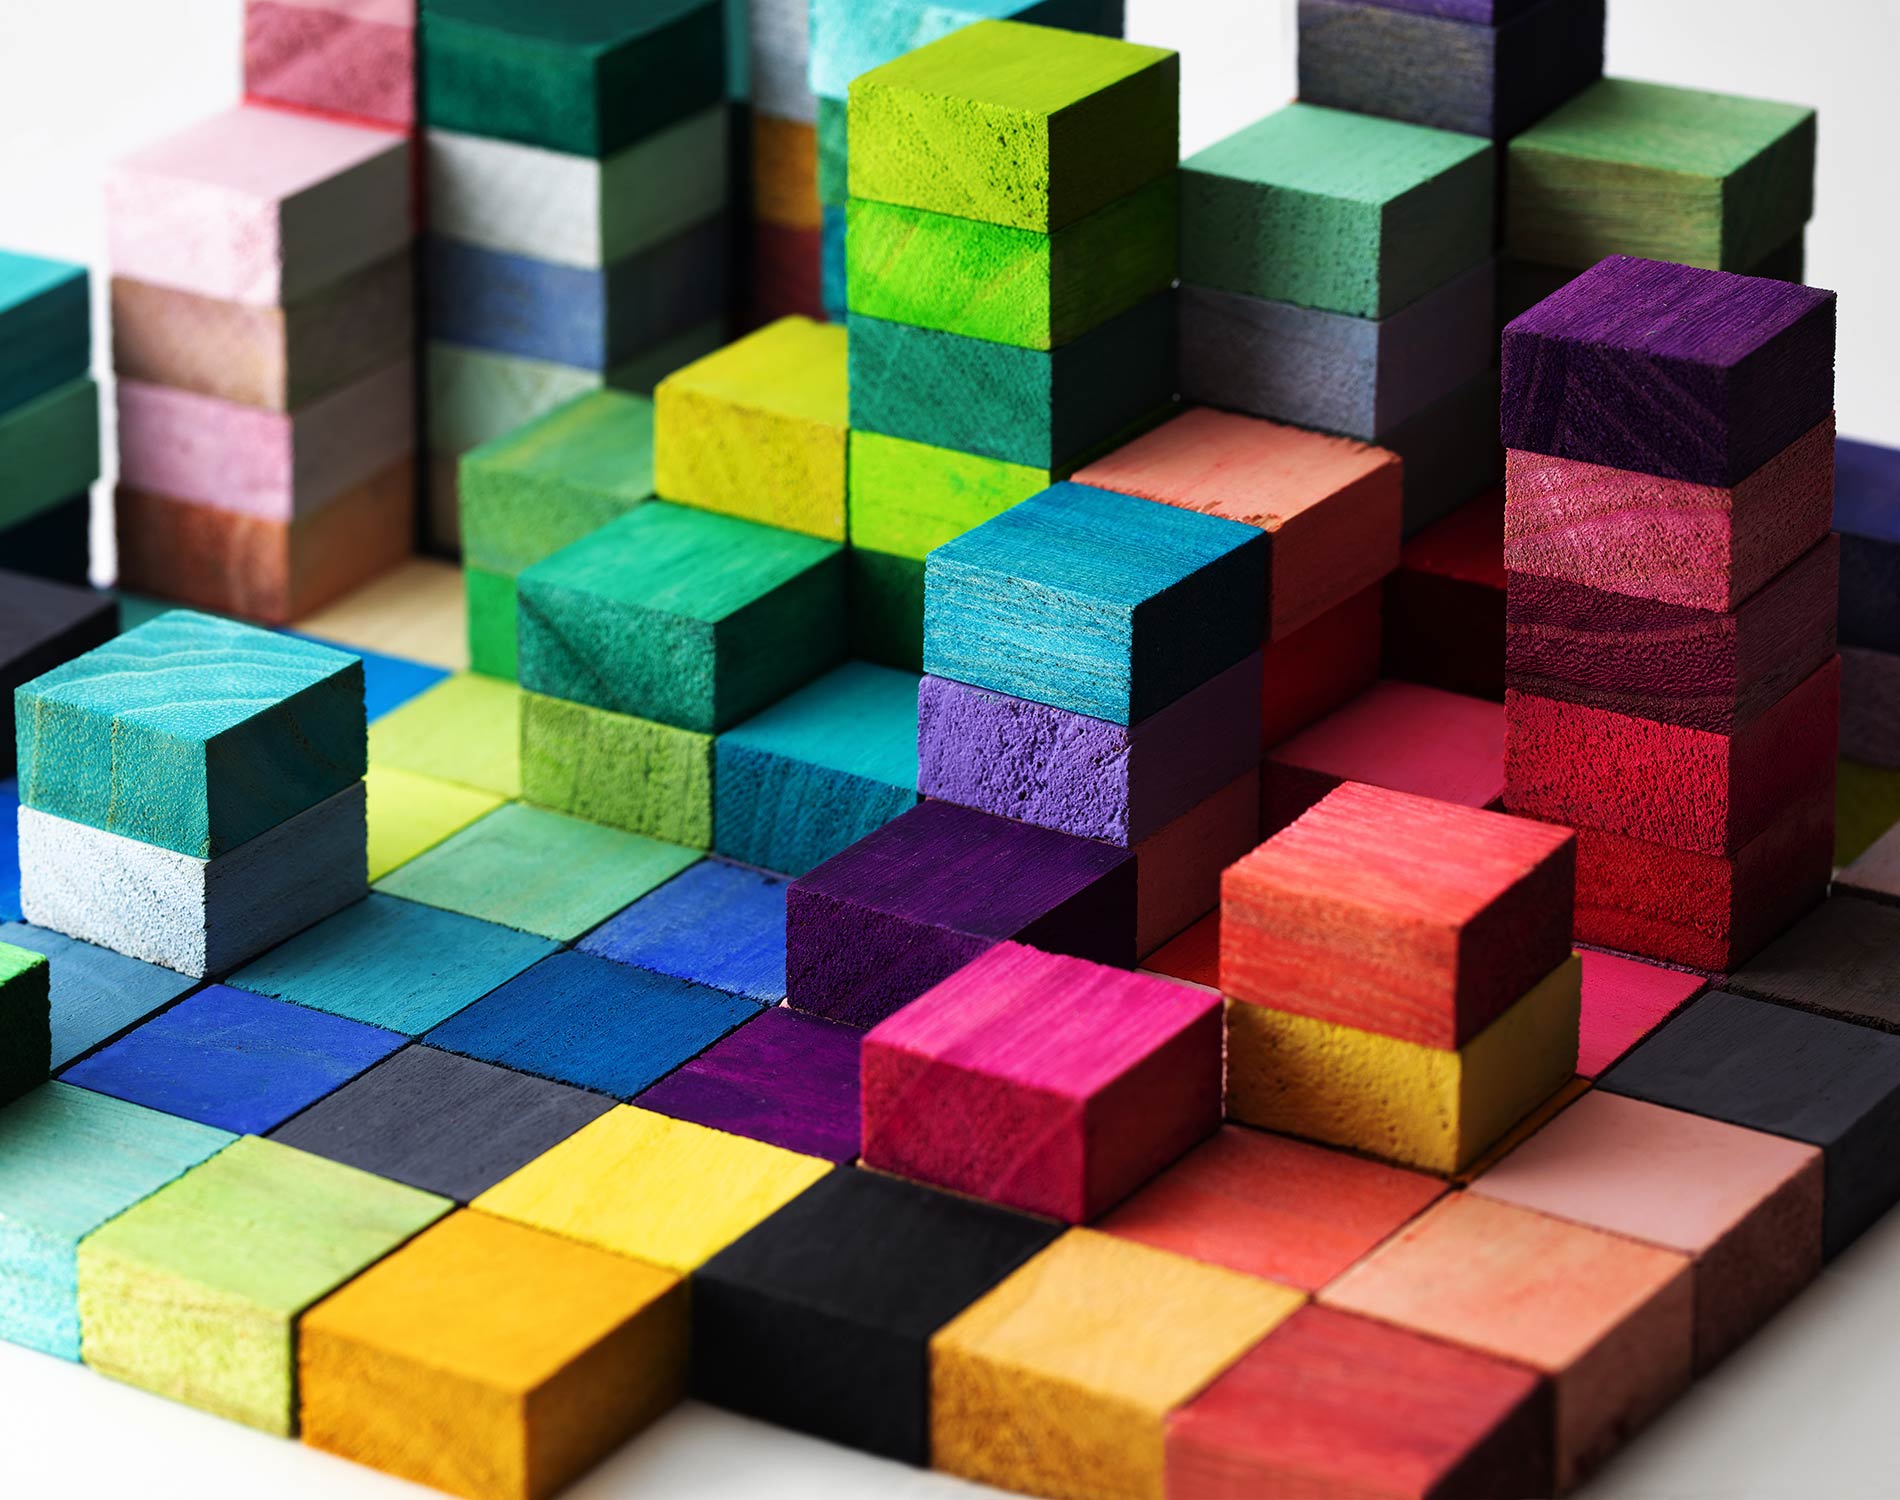 Colourful bricks